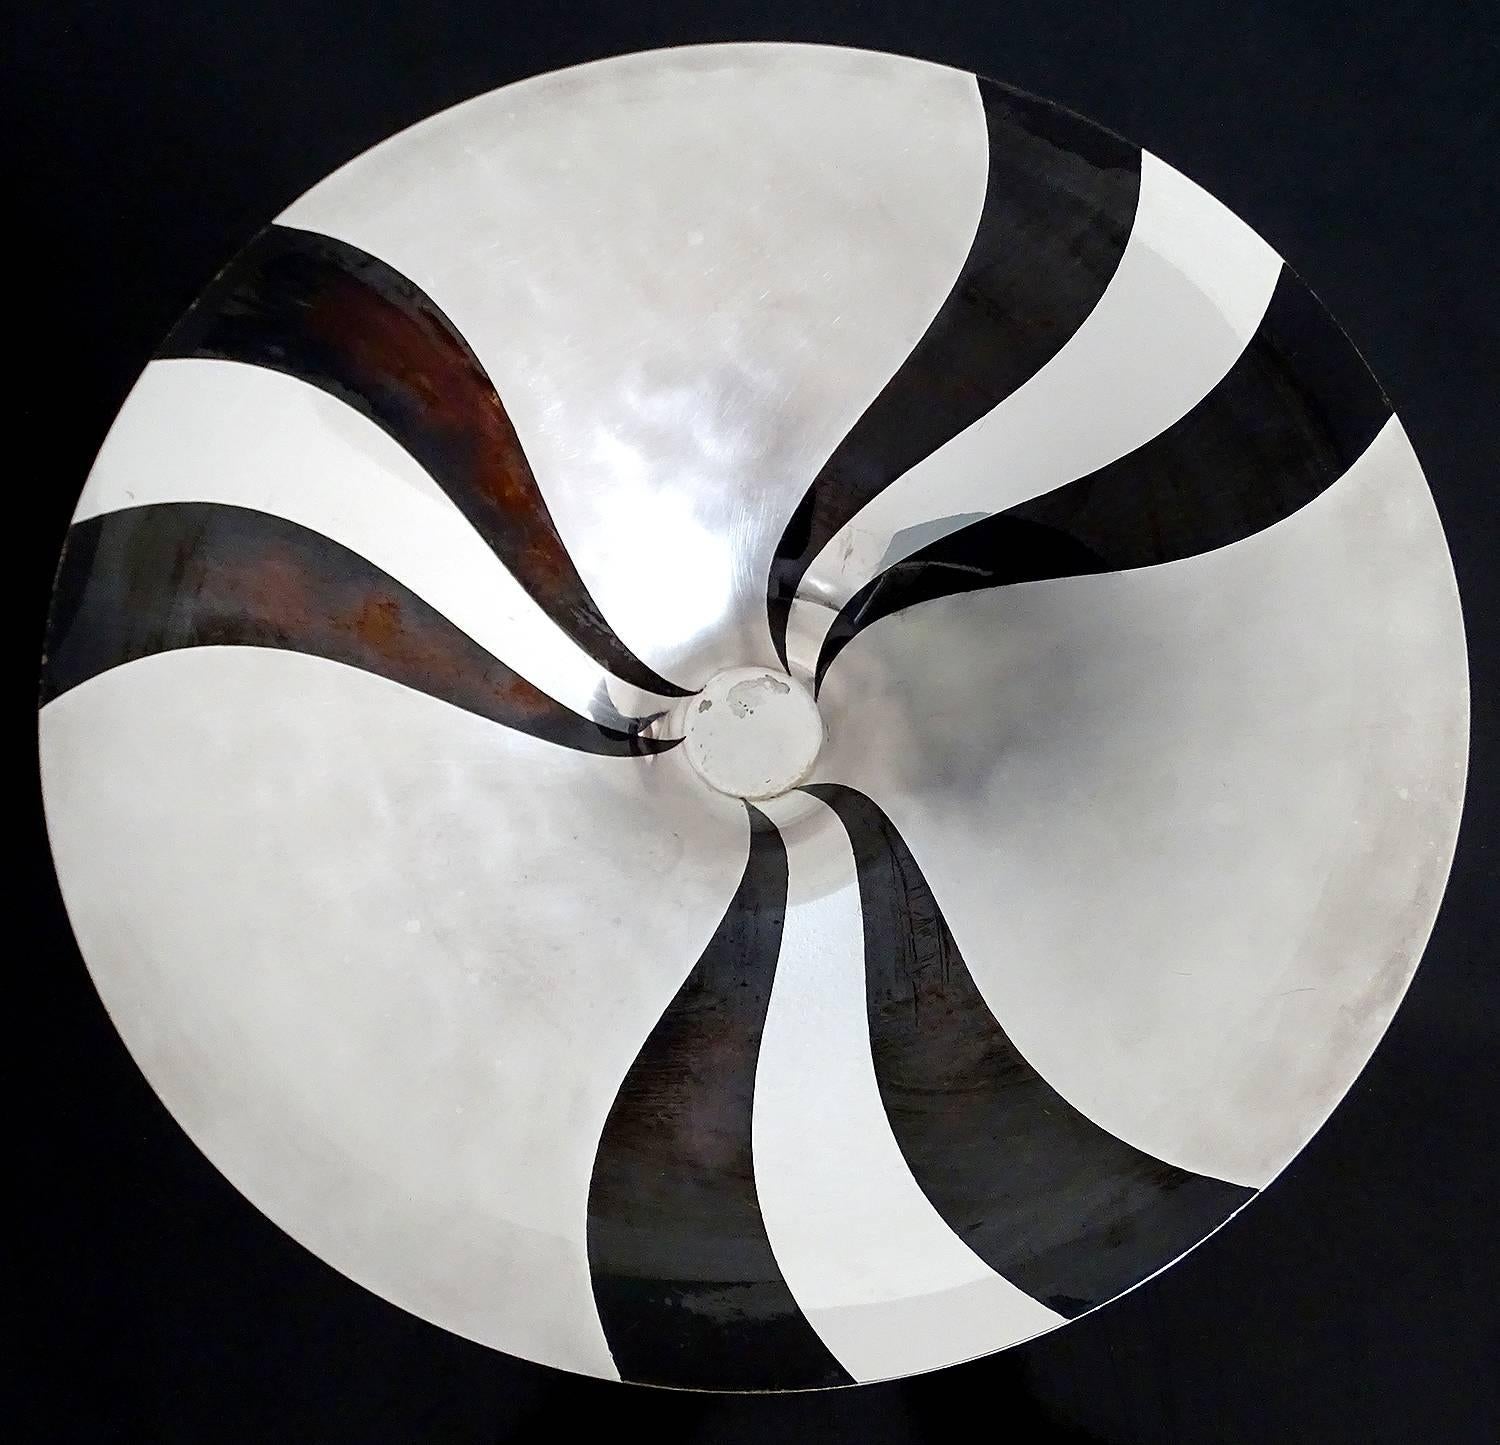 Large Art Deco WMF Ikora Silver Plated Bowl Centerpiece, 1930s Modernist Design (Art déco)